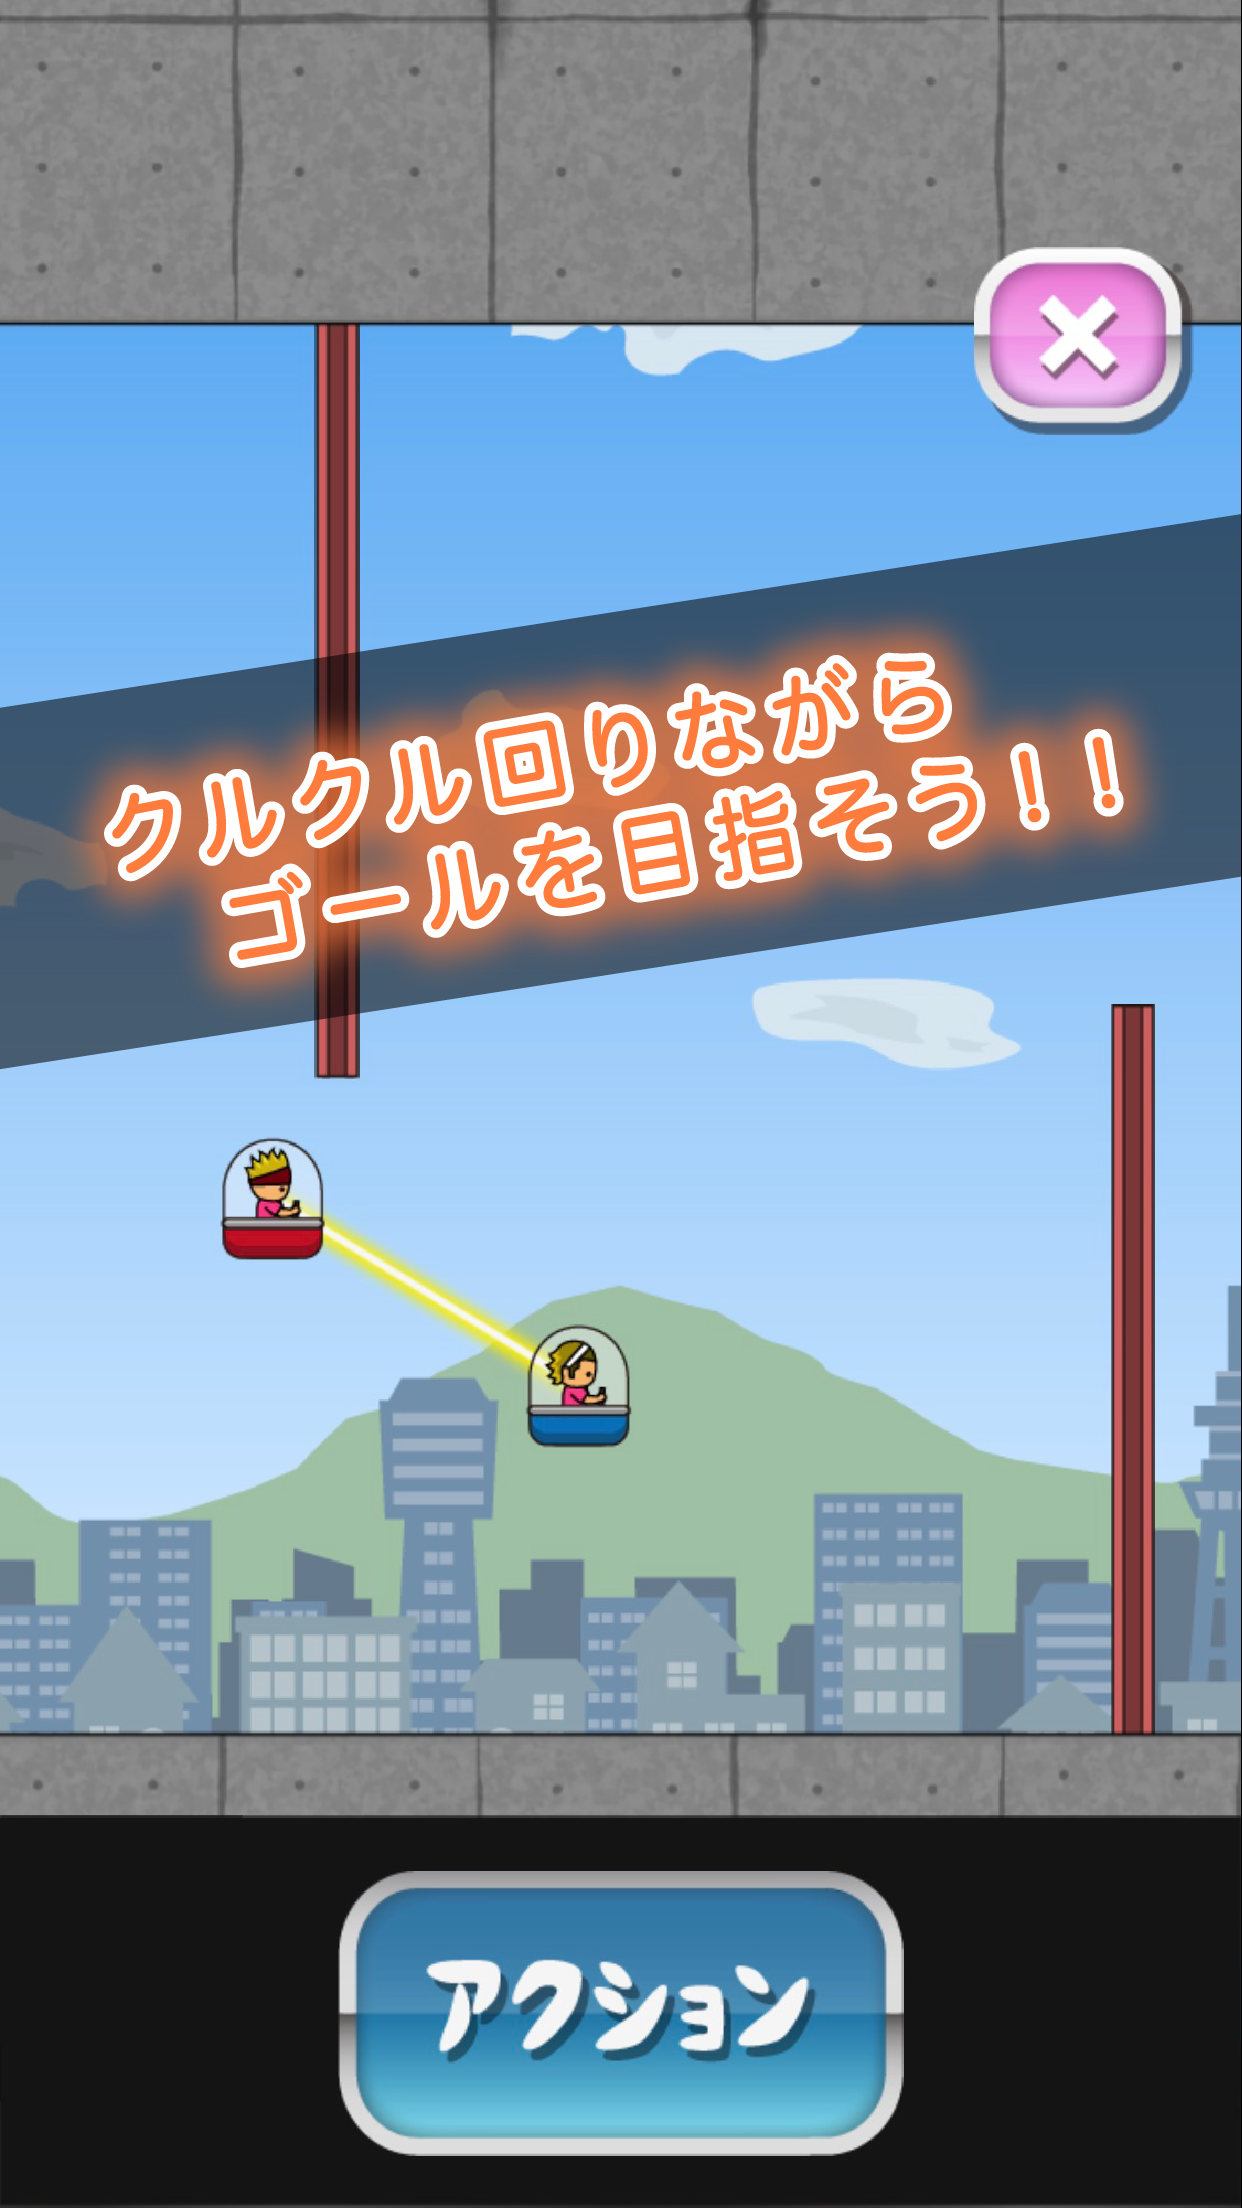 Screenshot 1 of La capsula Kuru Kuru di Tony-kun 1.0